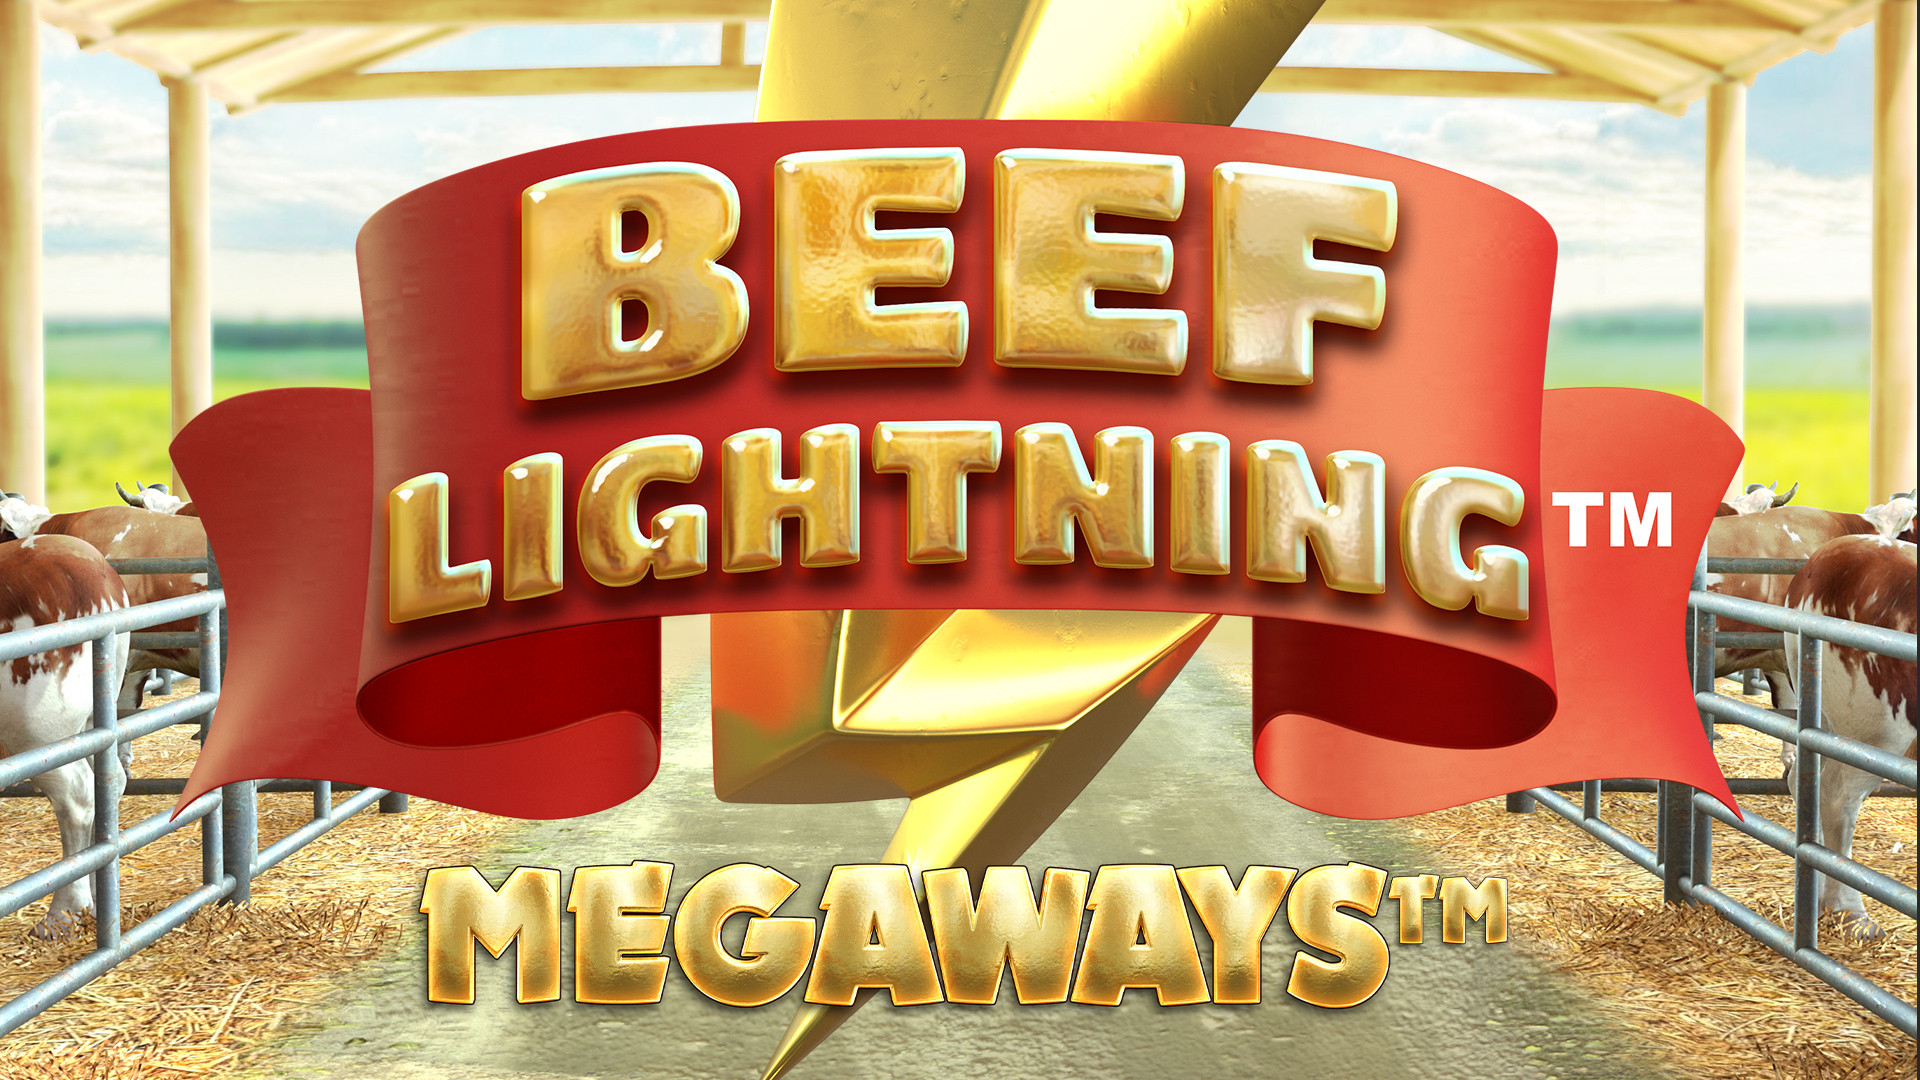 Beef Lightning MEGAWAYS